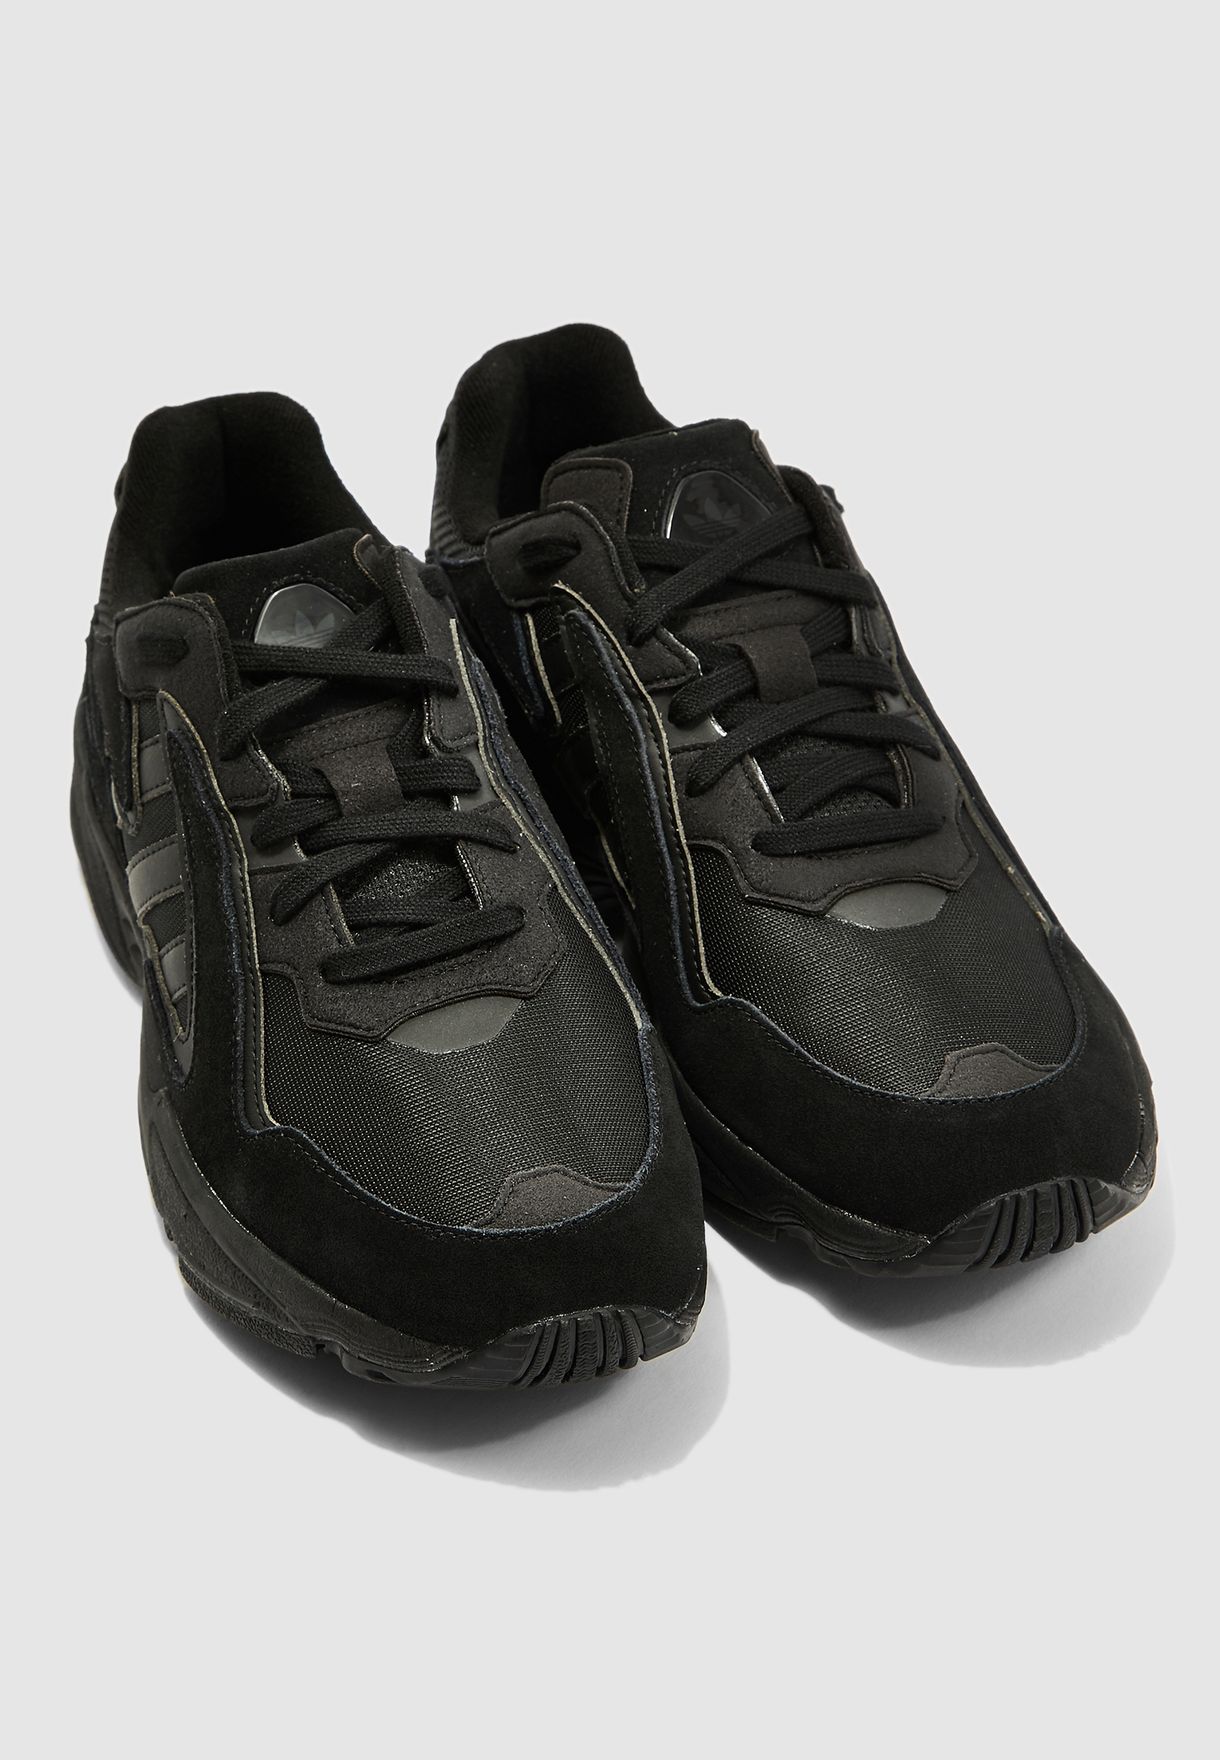 Adidas Yung 96 Chasm Black Cheap Online